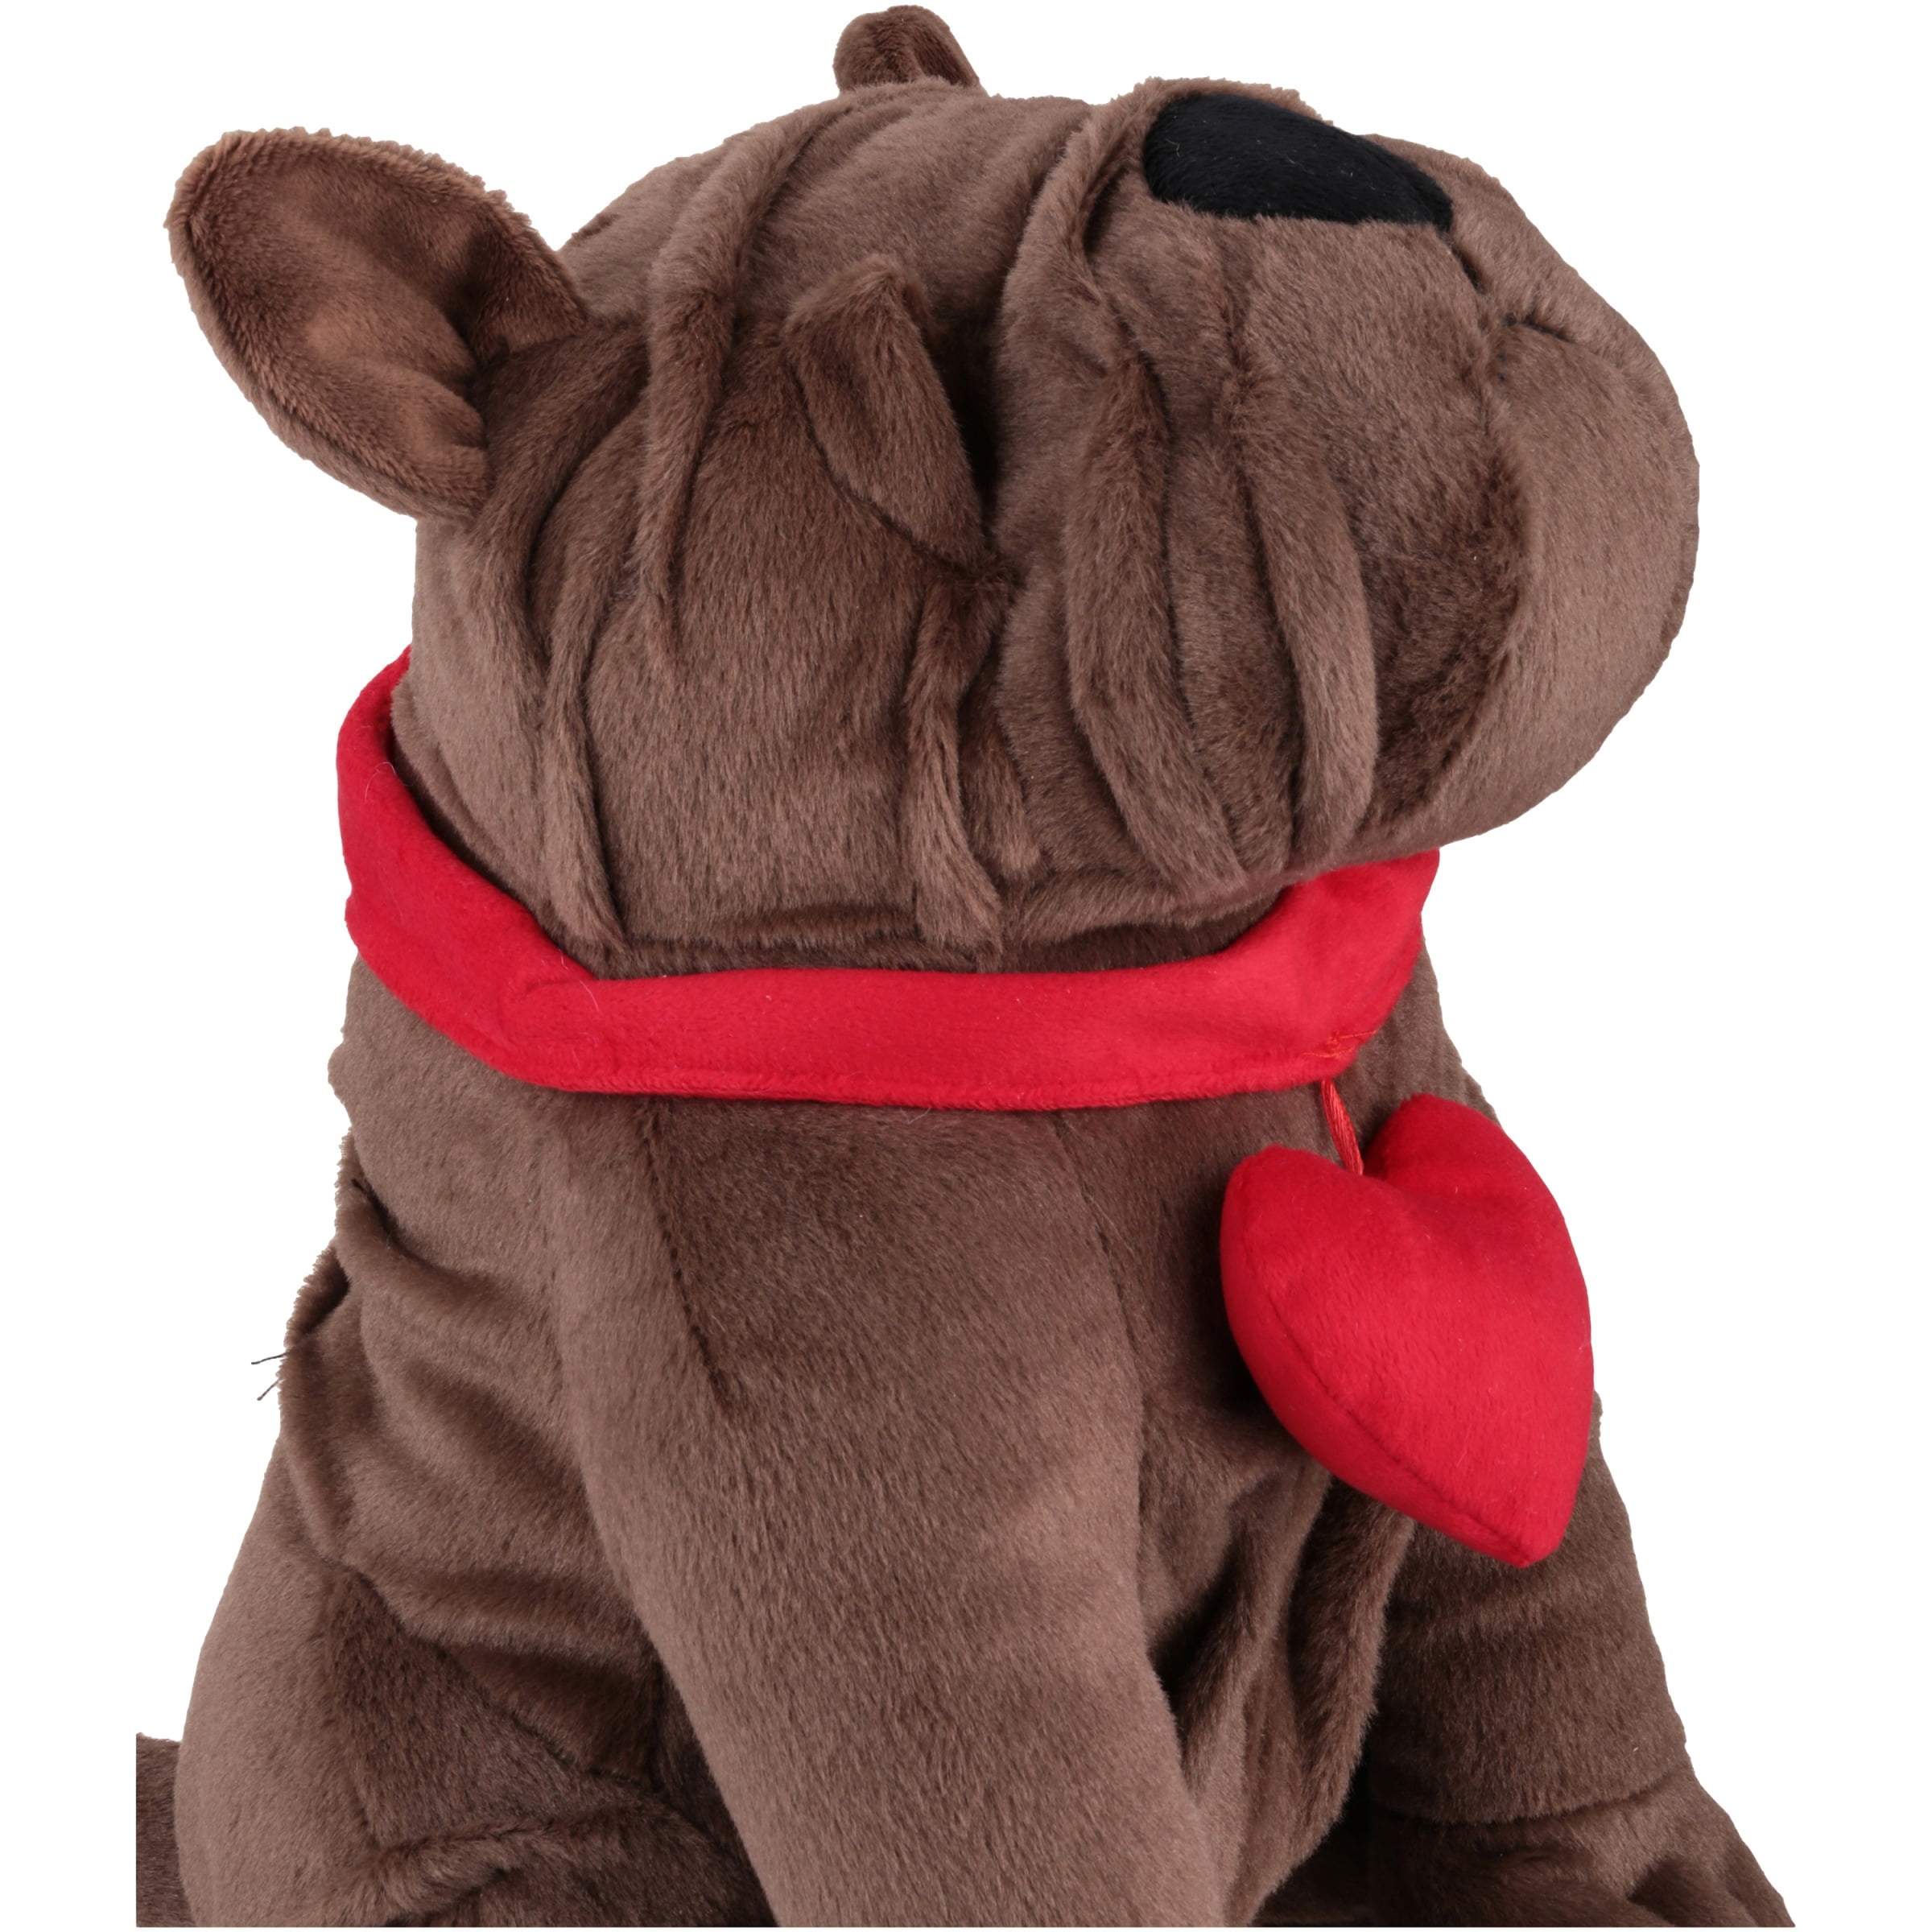 Details about   Dan Dee Bulldog Sitting Plush 14” Heart Collar Brown Dog Stuffed Animal New 